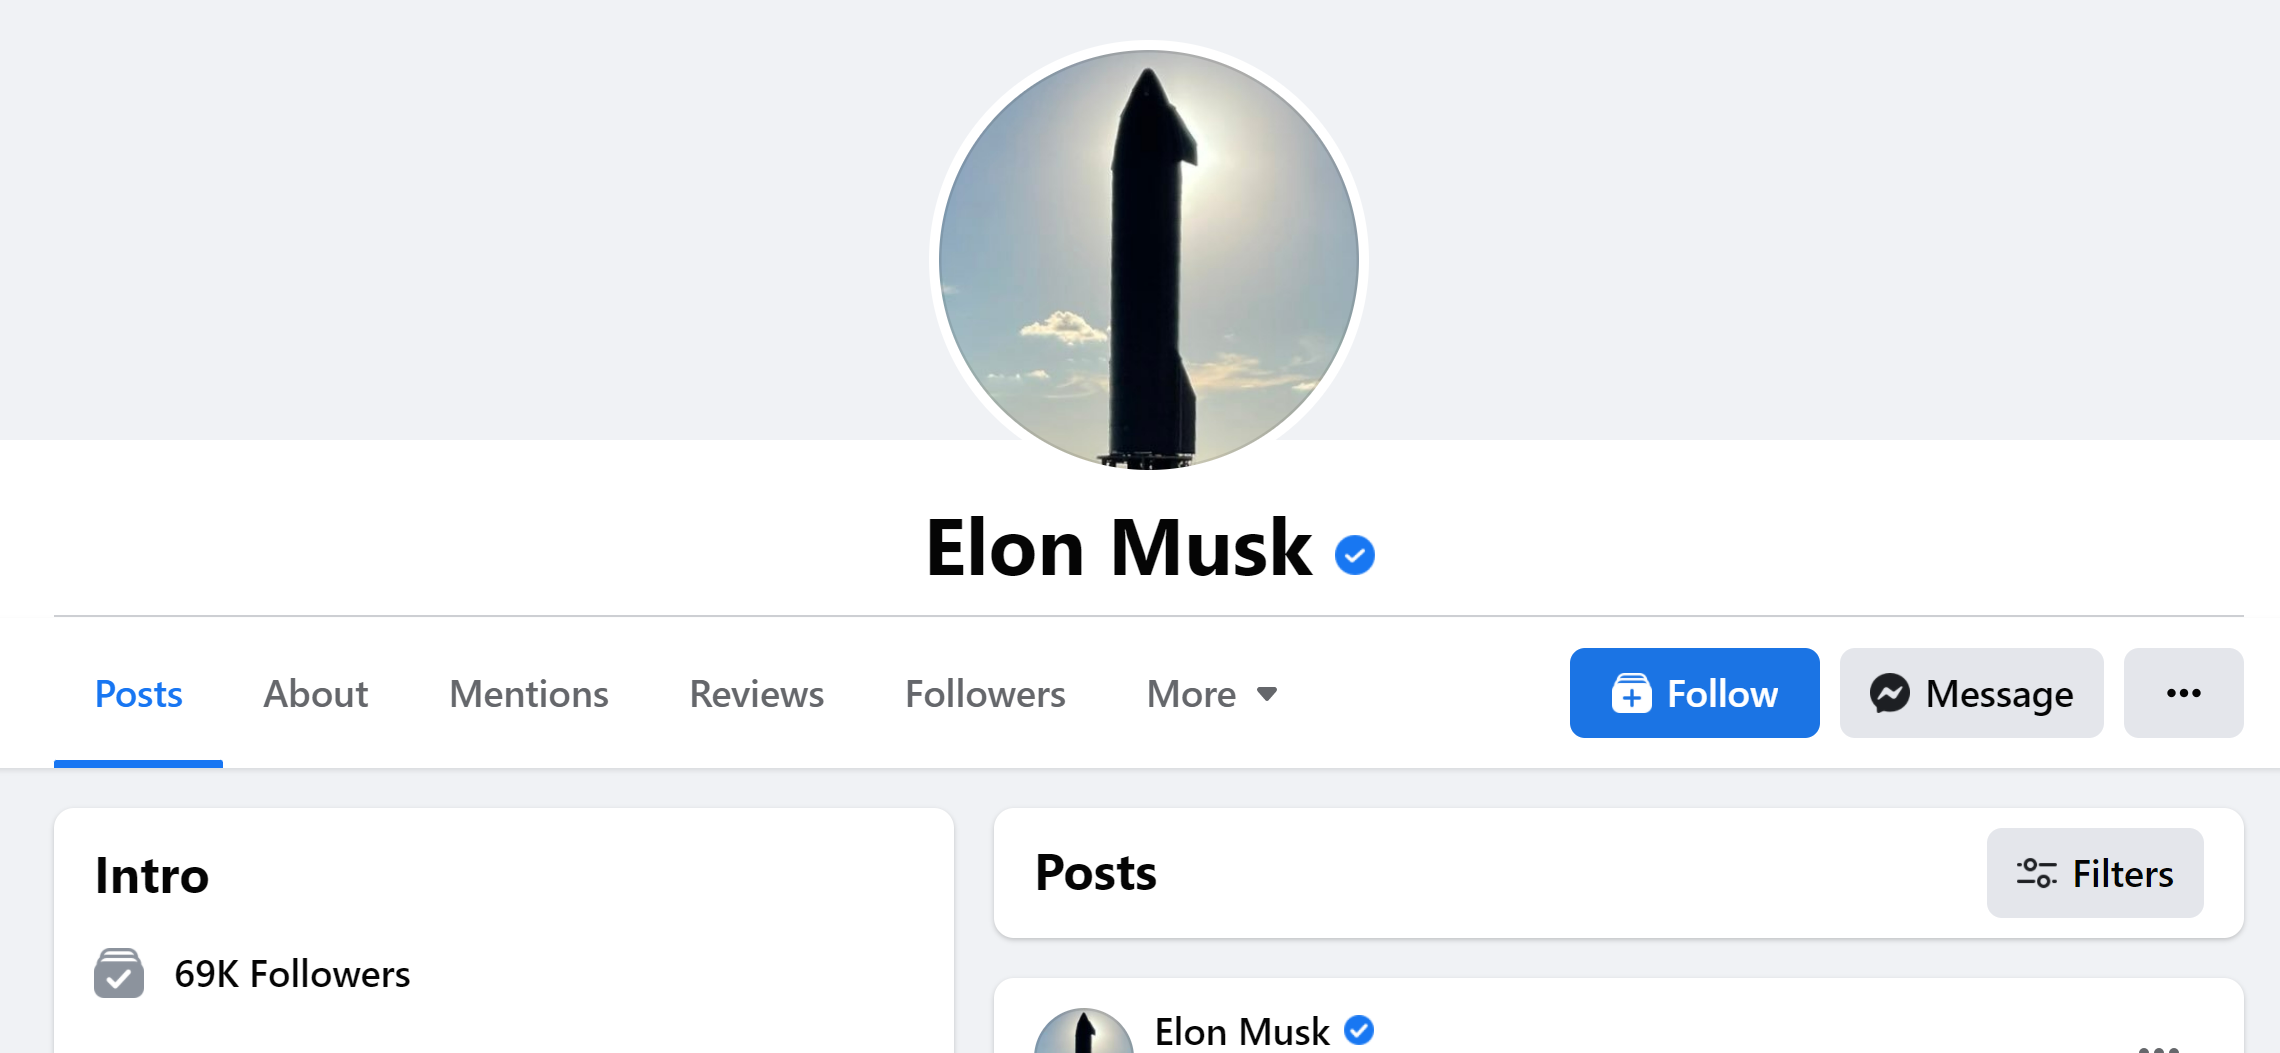 Elon Musk Facebook Page